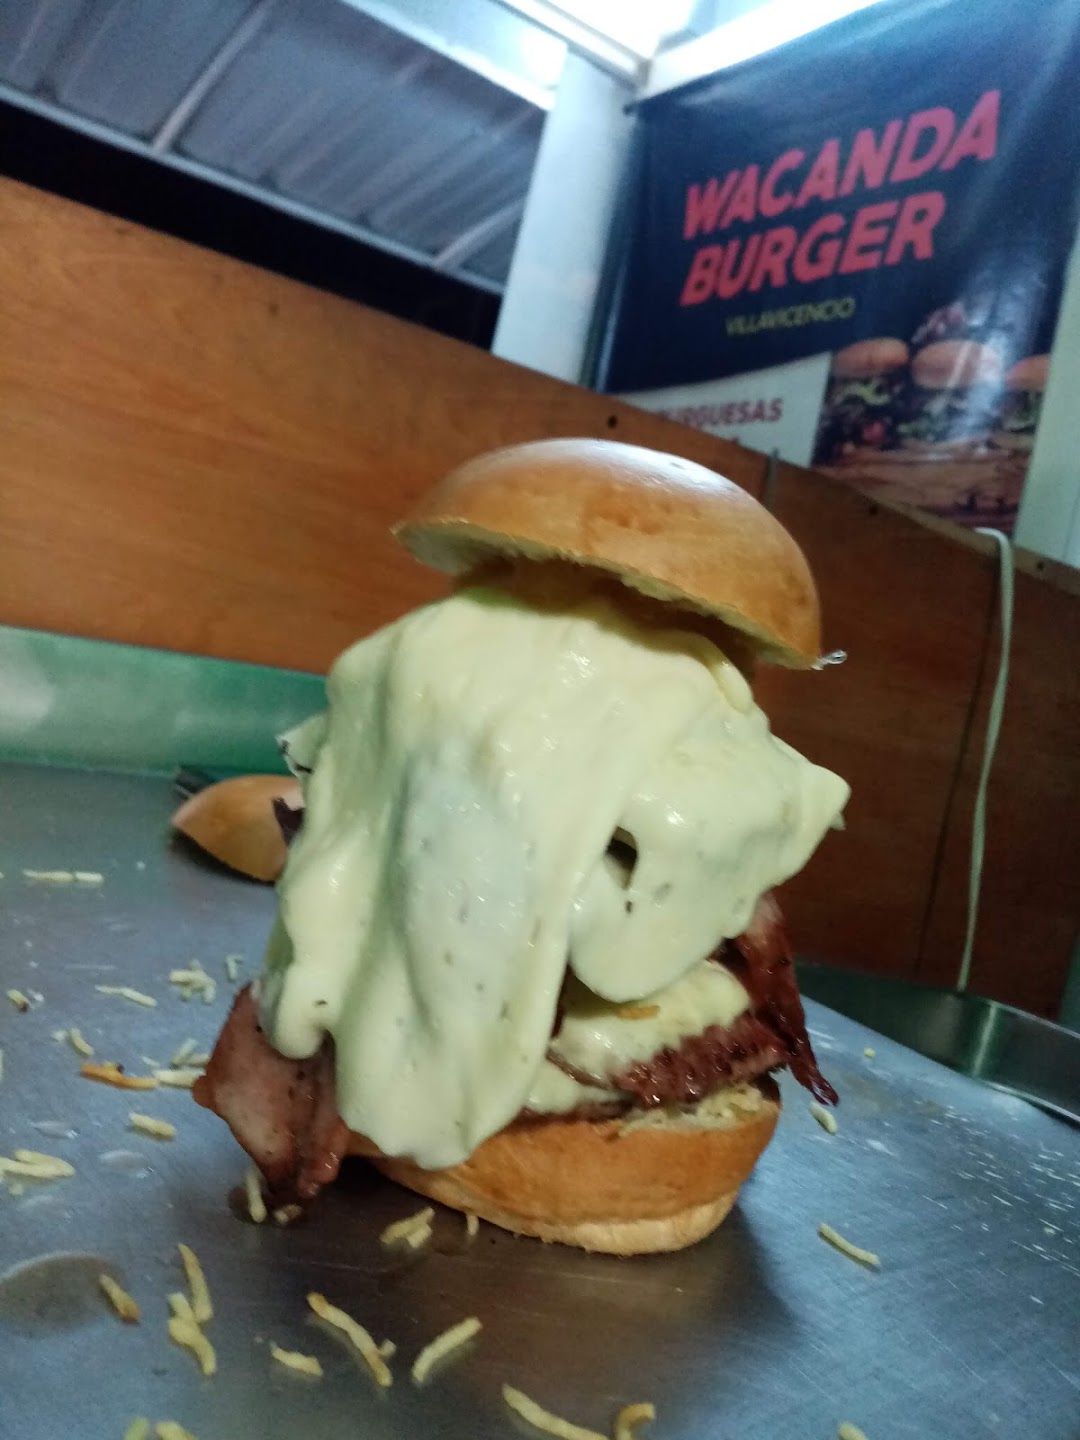 Wacanda burger